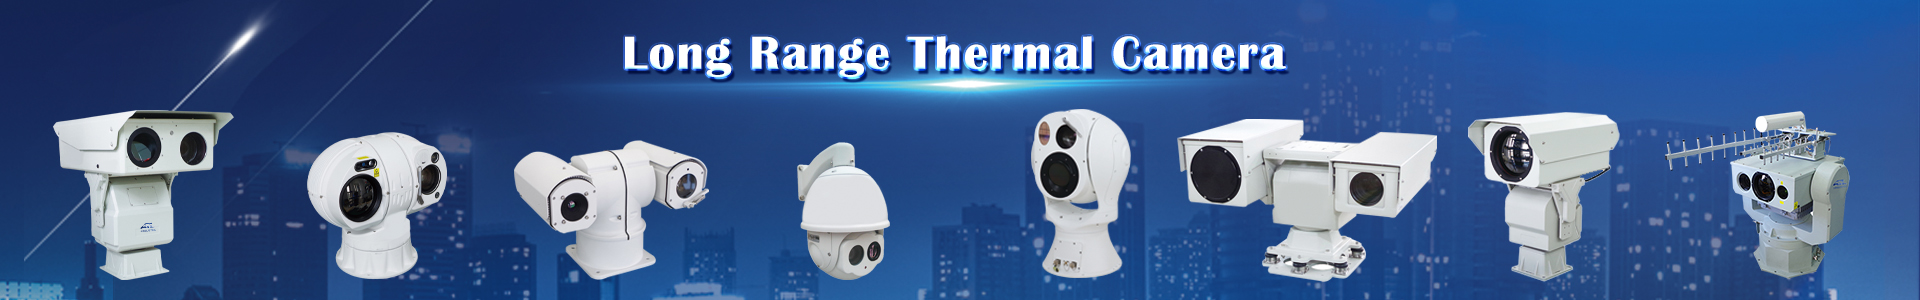 long range thermal camera